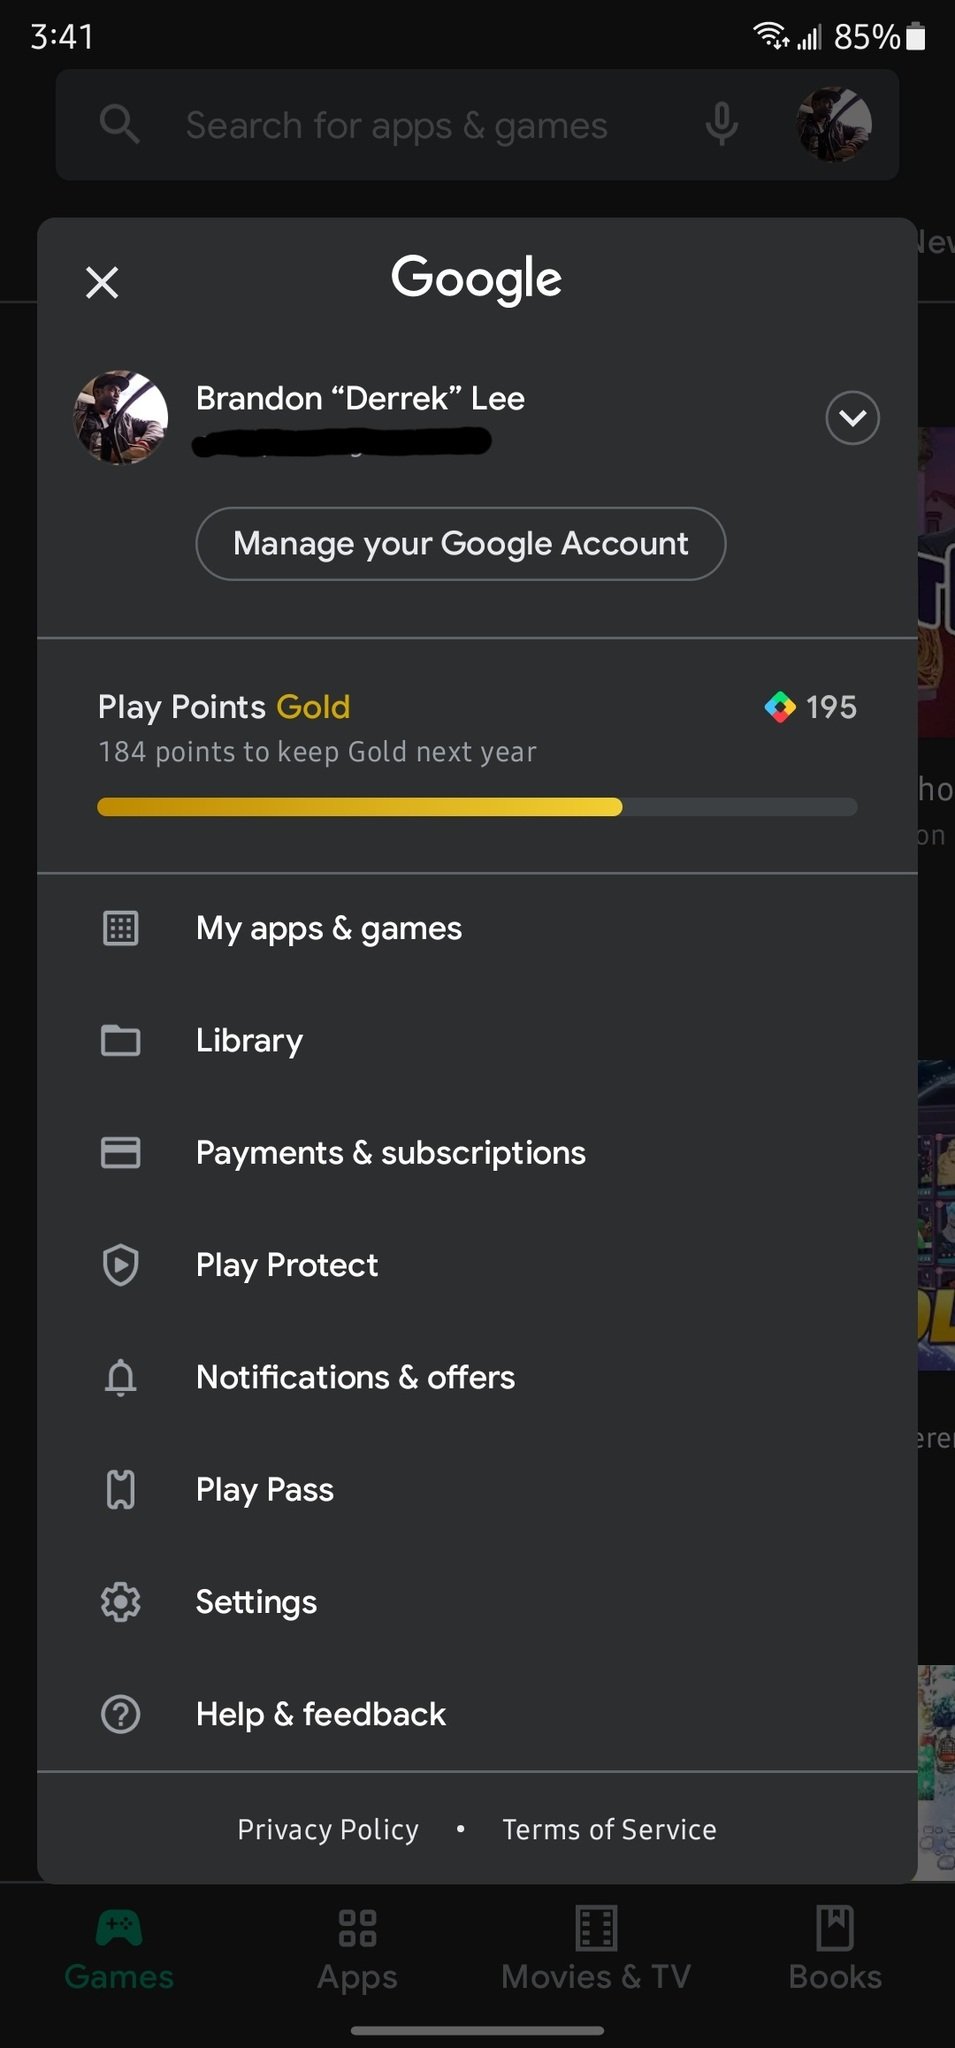 Google Play Store 2021 Ui Redesign